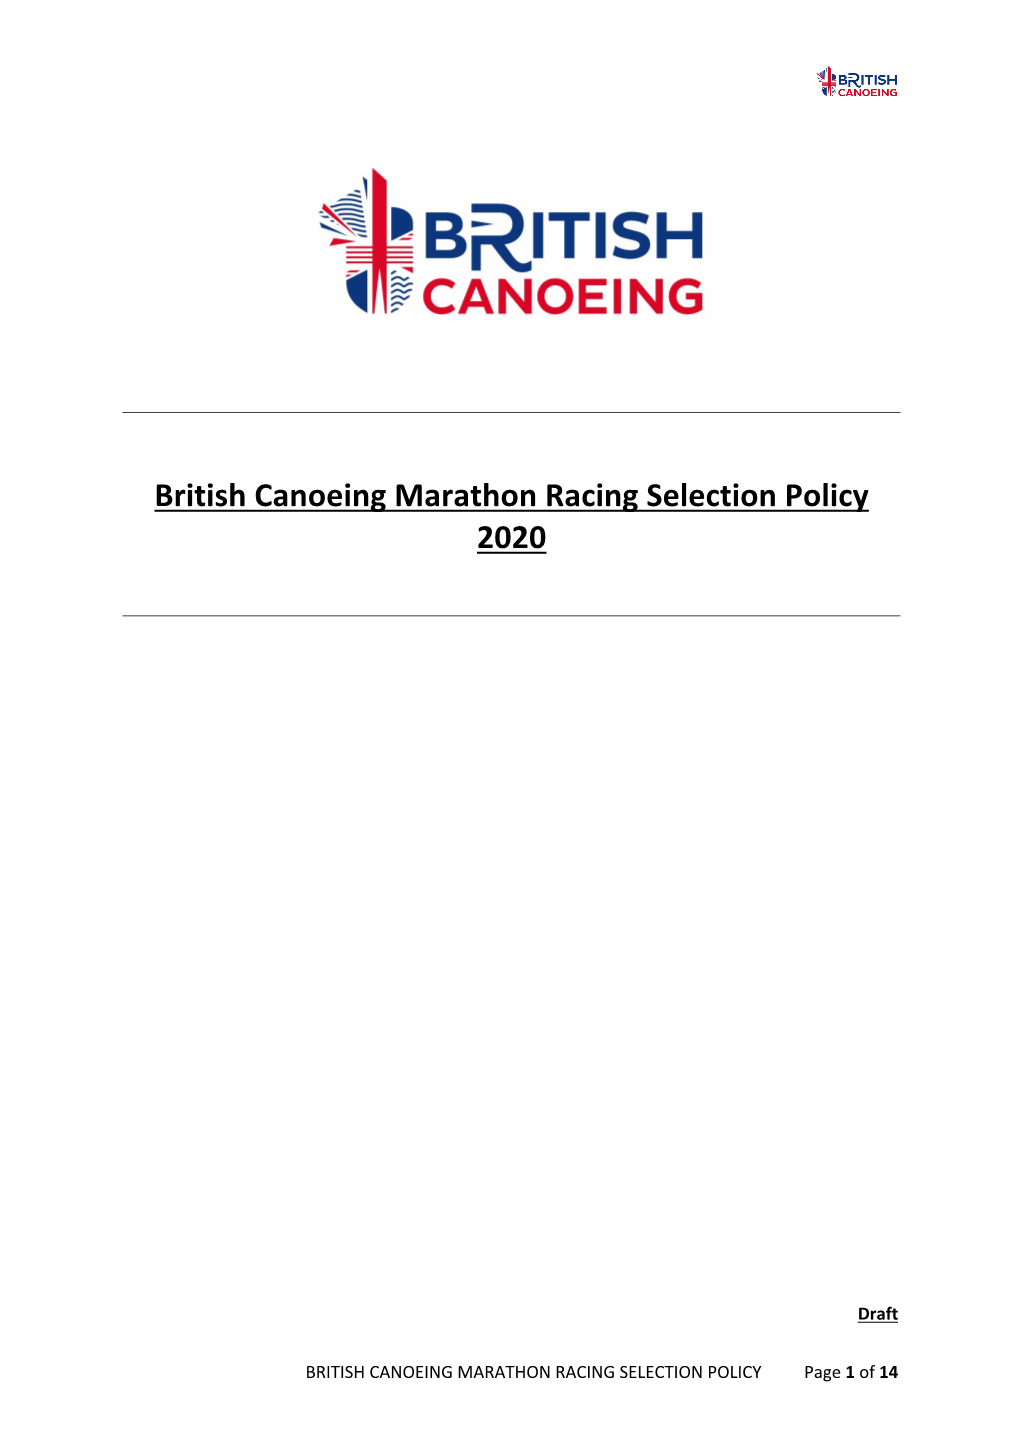 British Canoeing Marathon Racing Selection Policy 2020